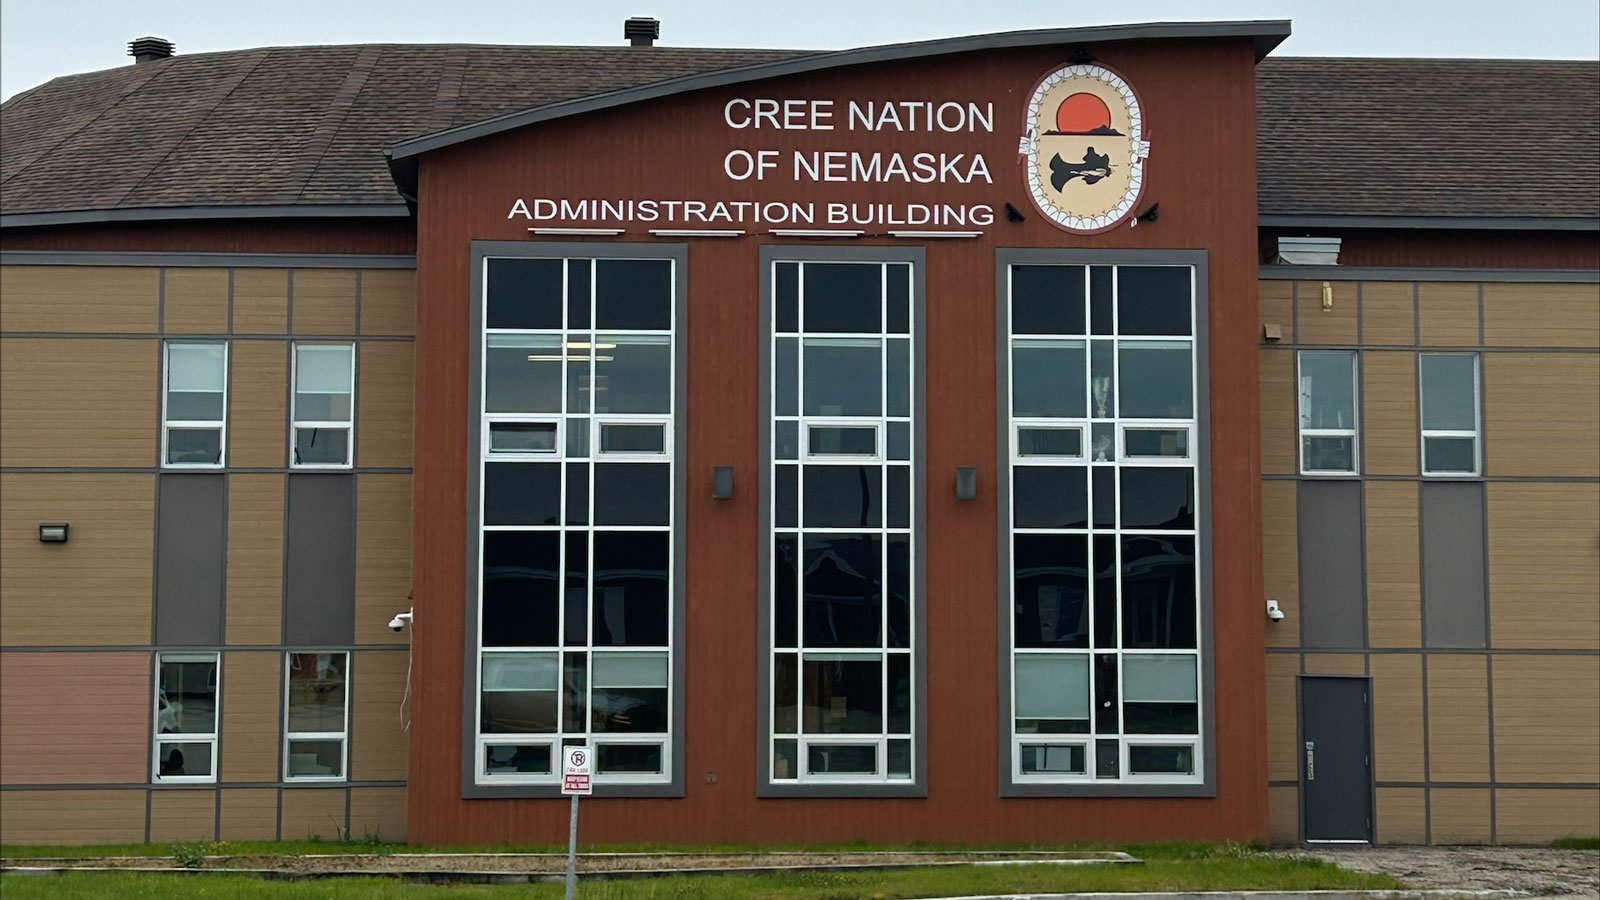 Cree Nation of Nemaska